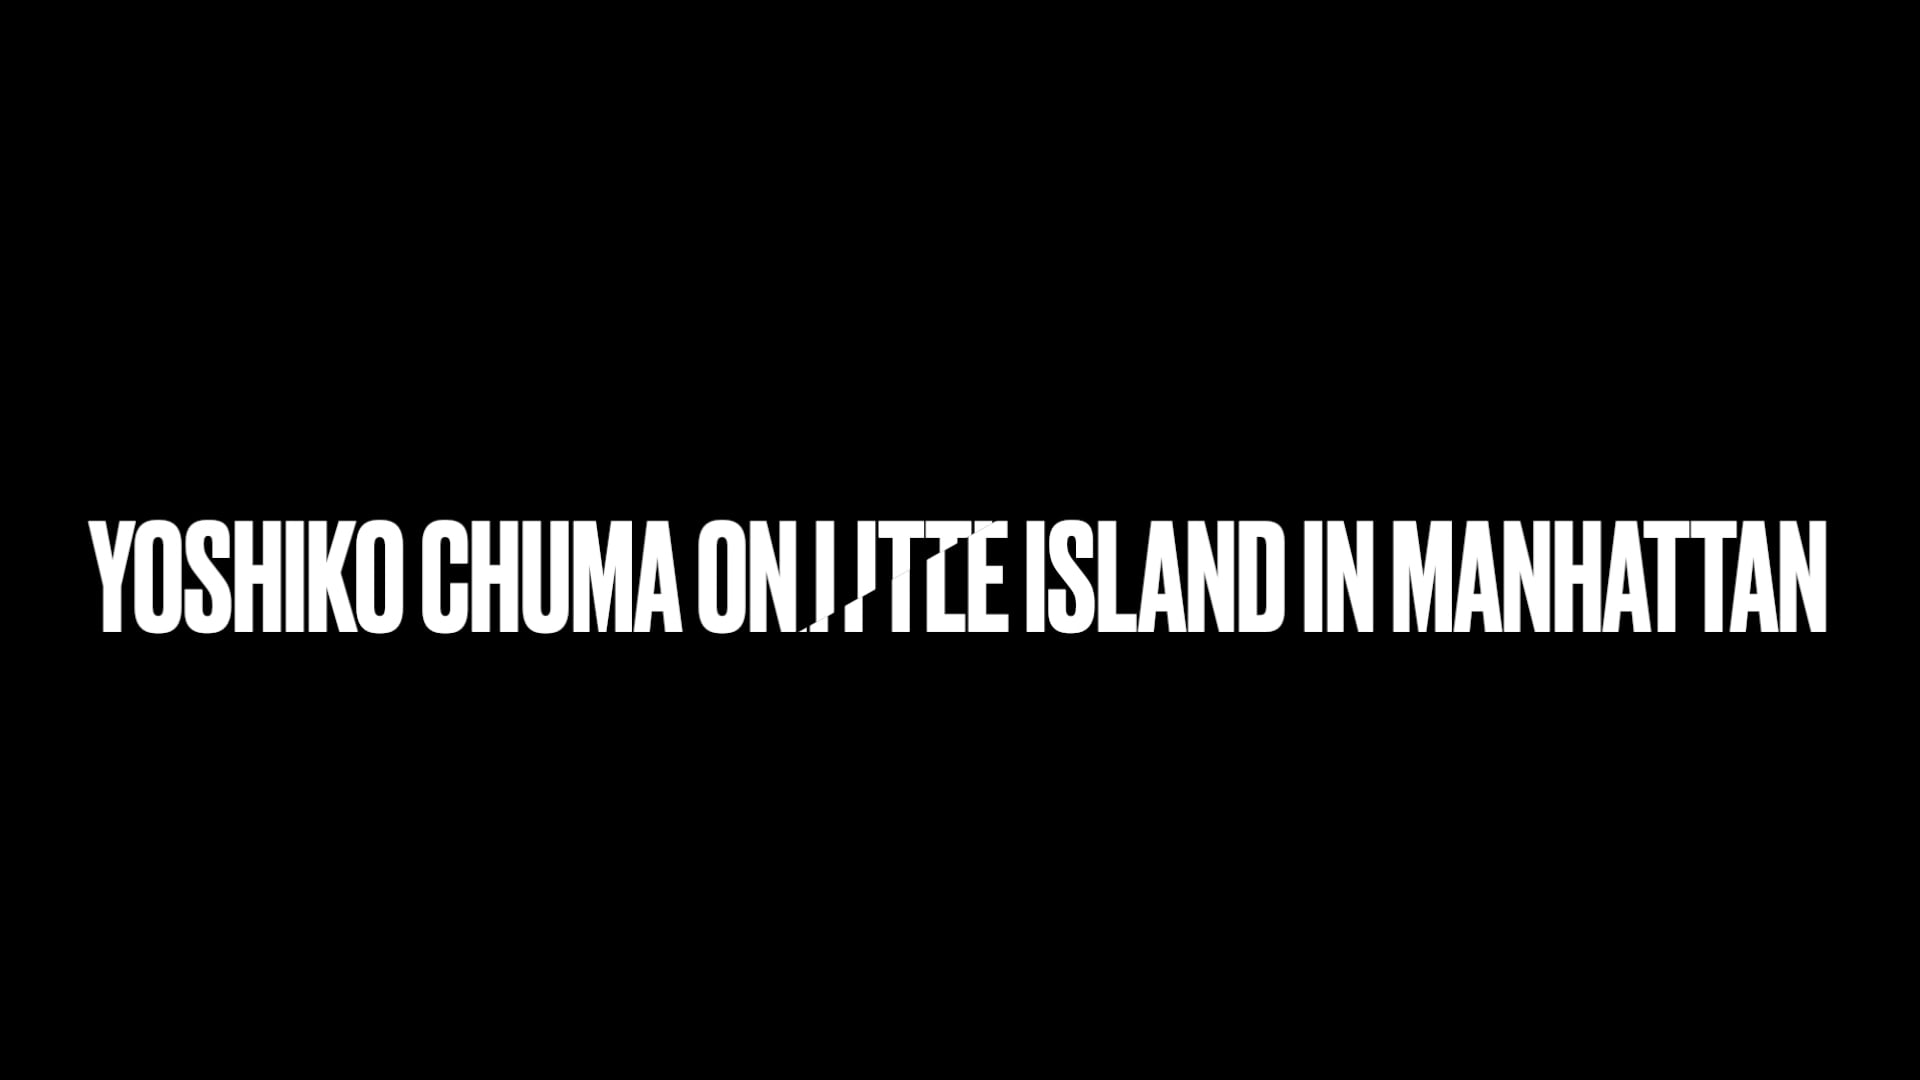 Yoshiko Chuma on Little Island in Manhattan